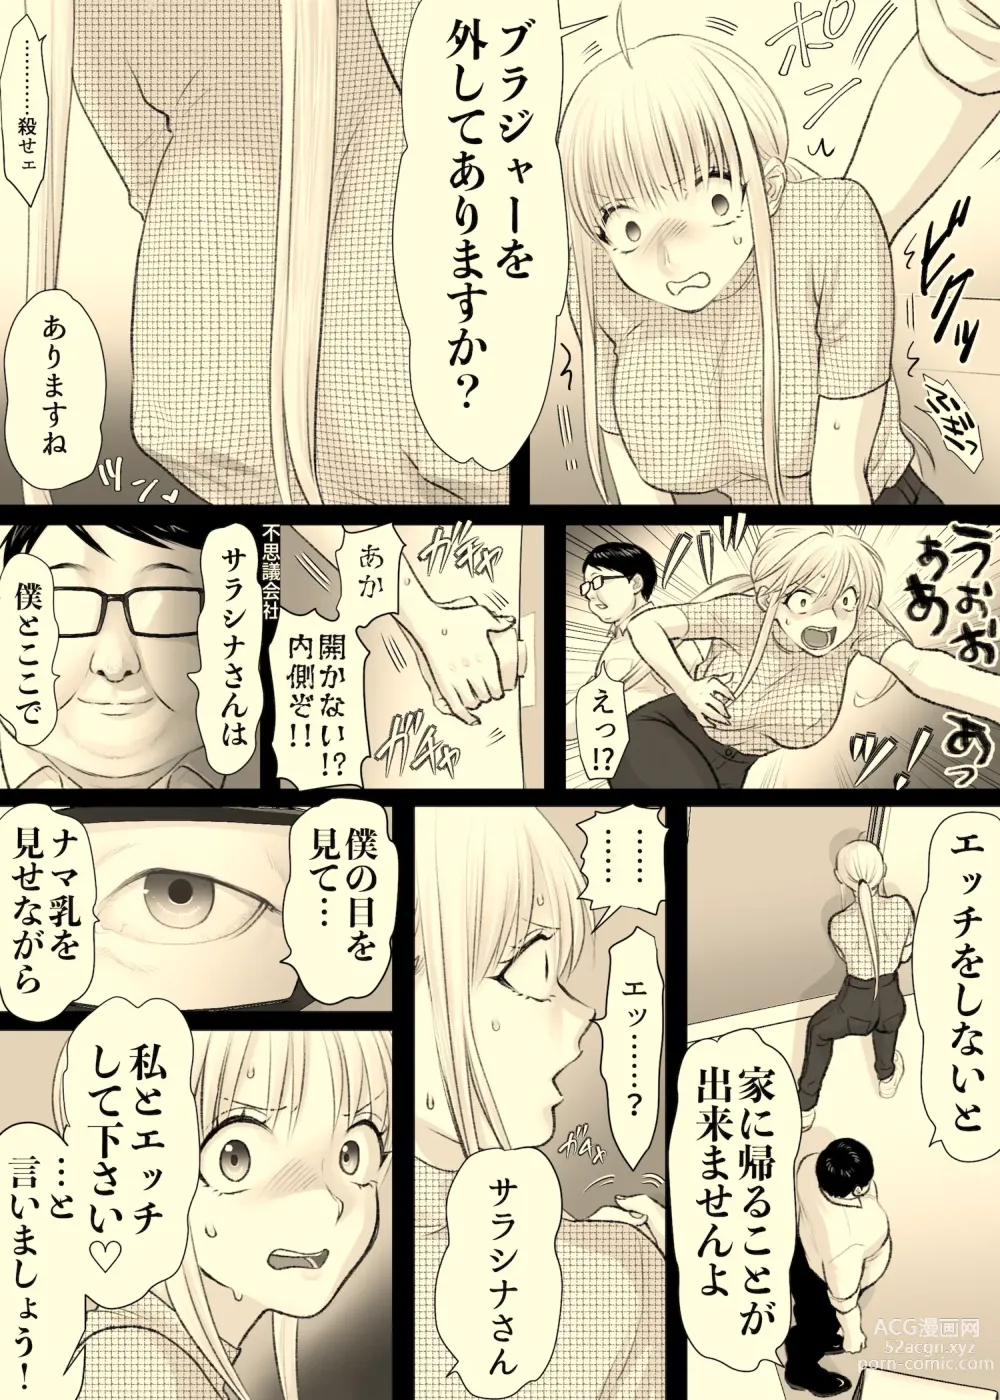 Page 7 of doujinshi Hi Genjitsu